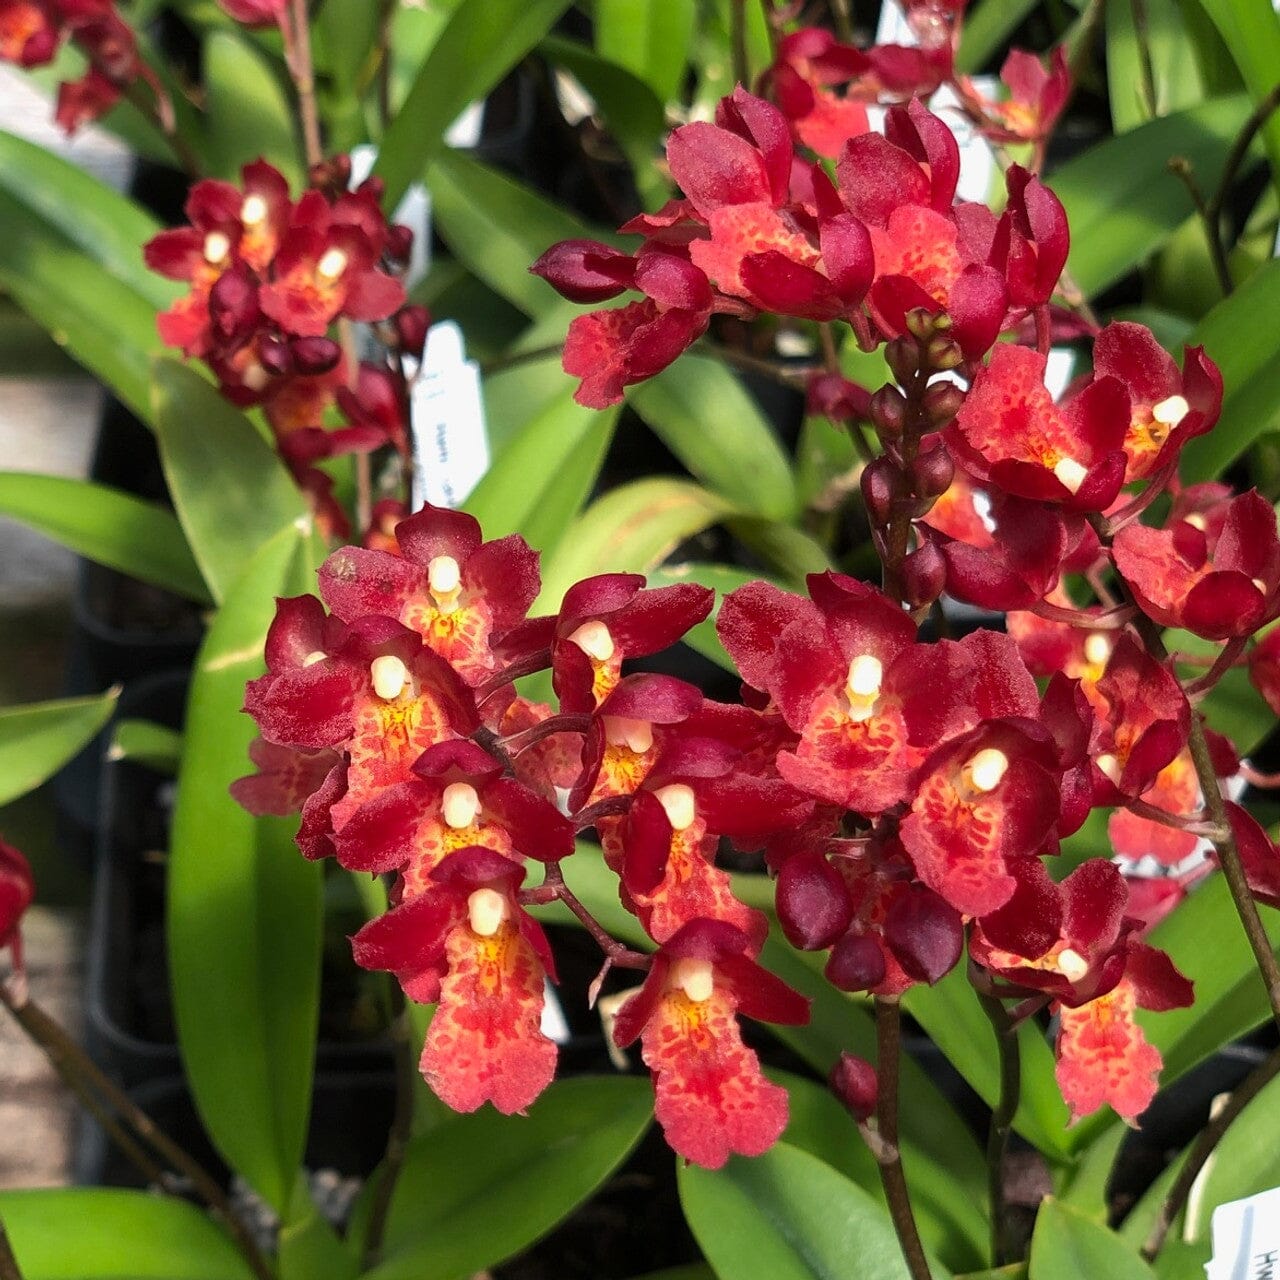 Oncidium Alliance - Howeara Lava Burst 'Puanani' AM/AOS Oncidium La Foresta Orchids 